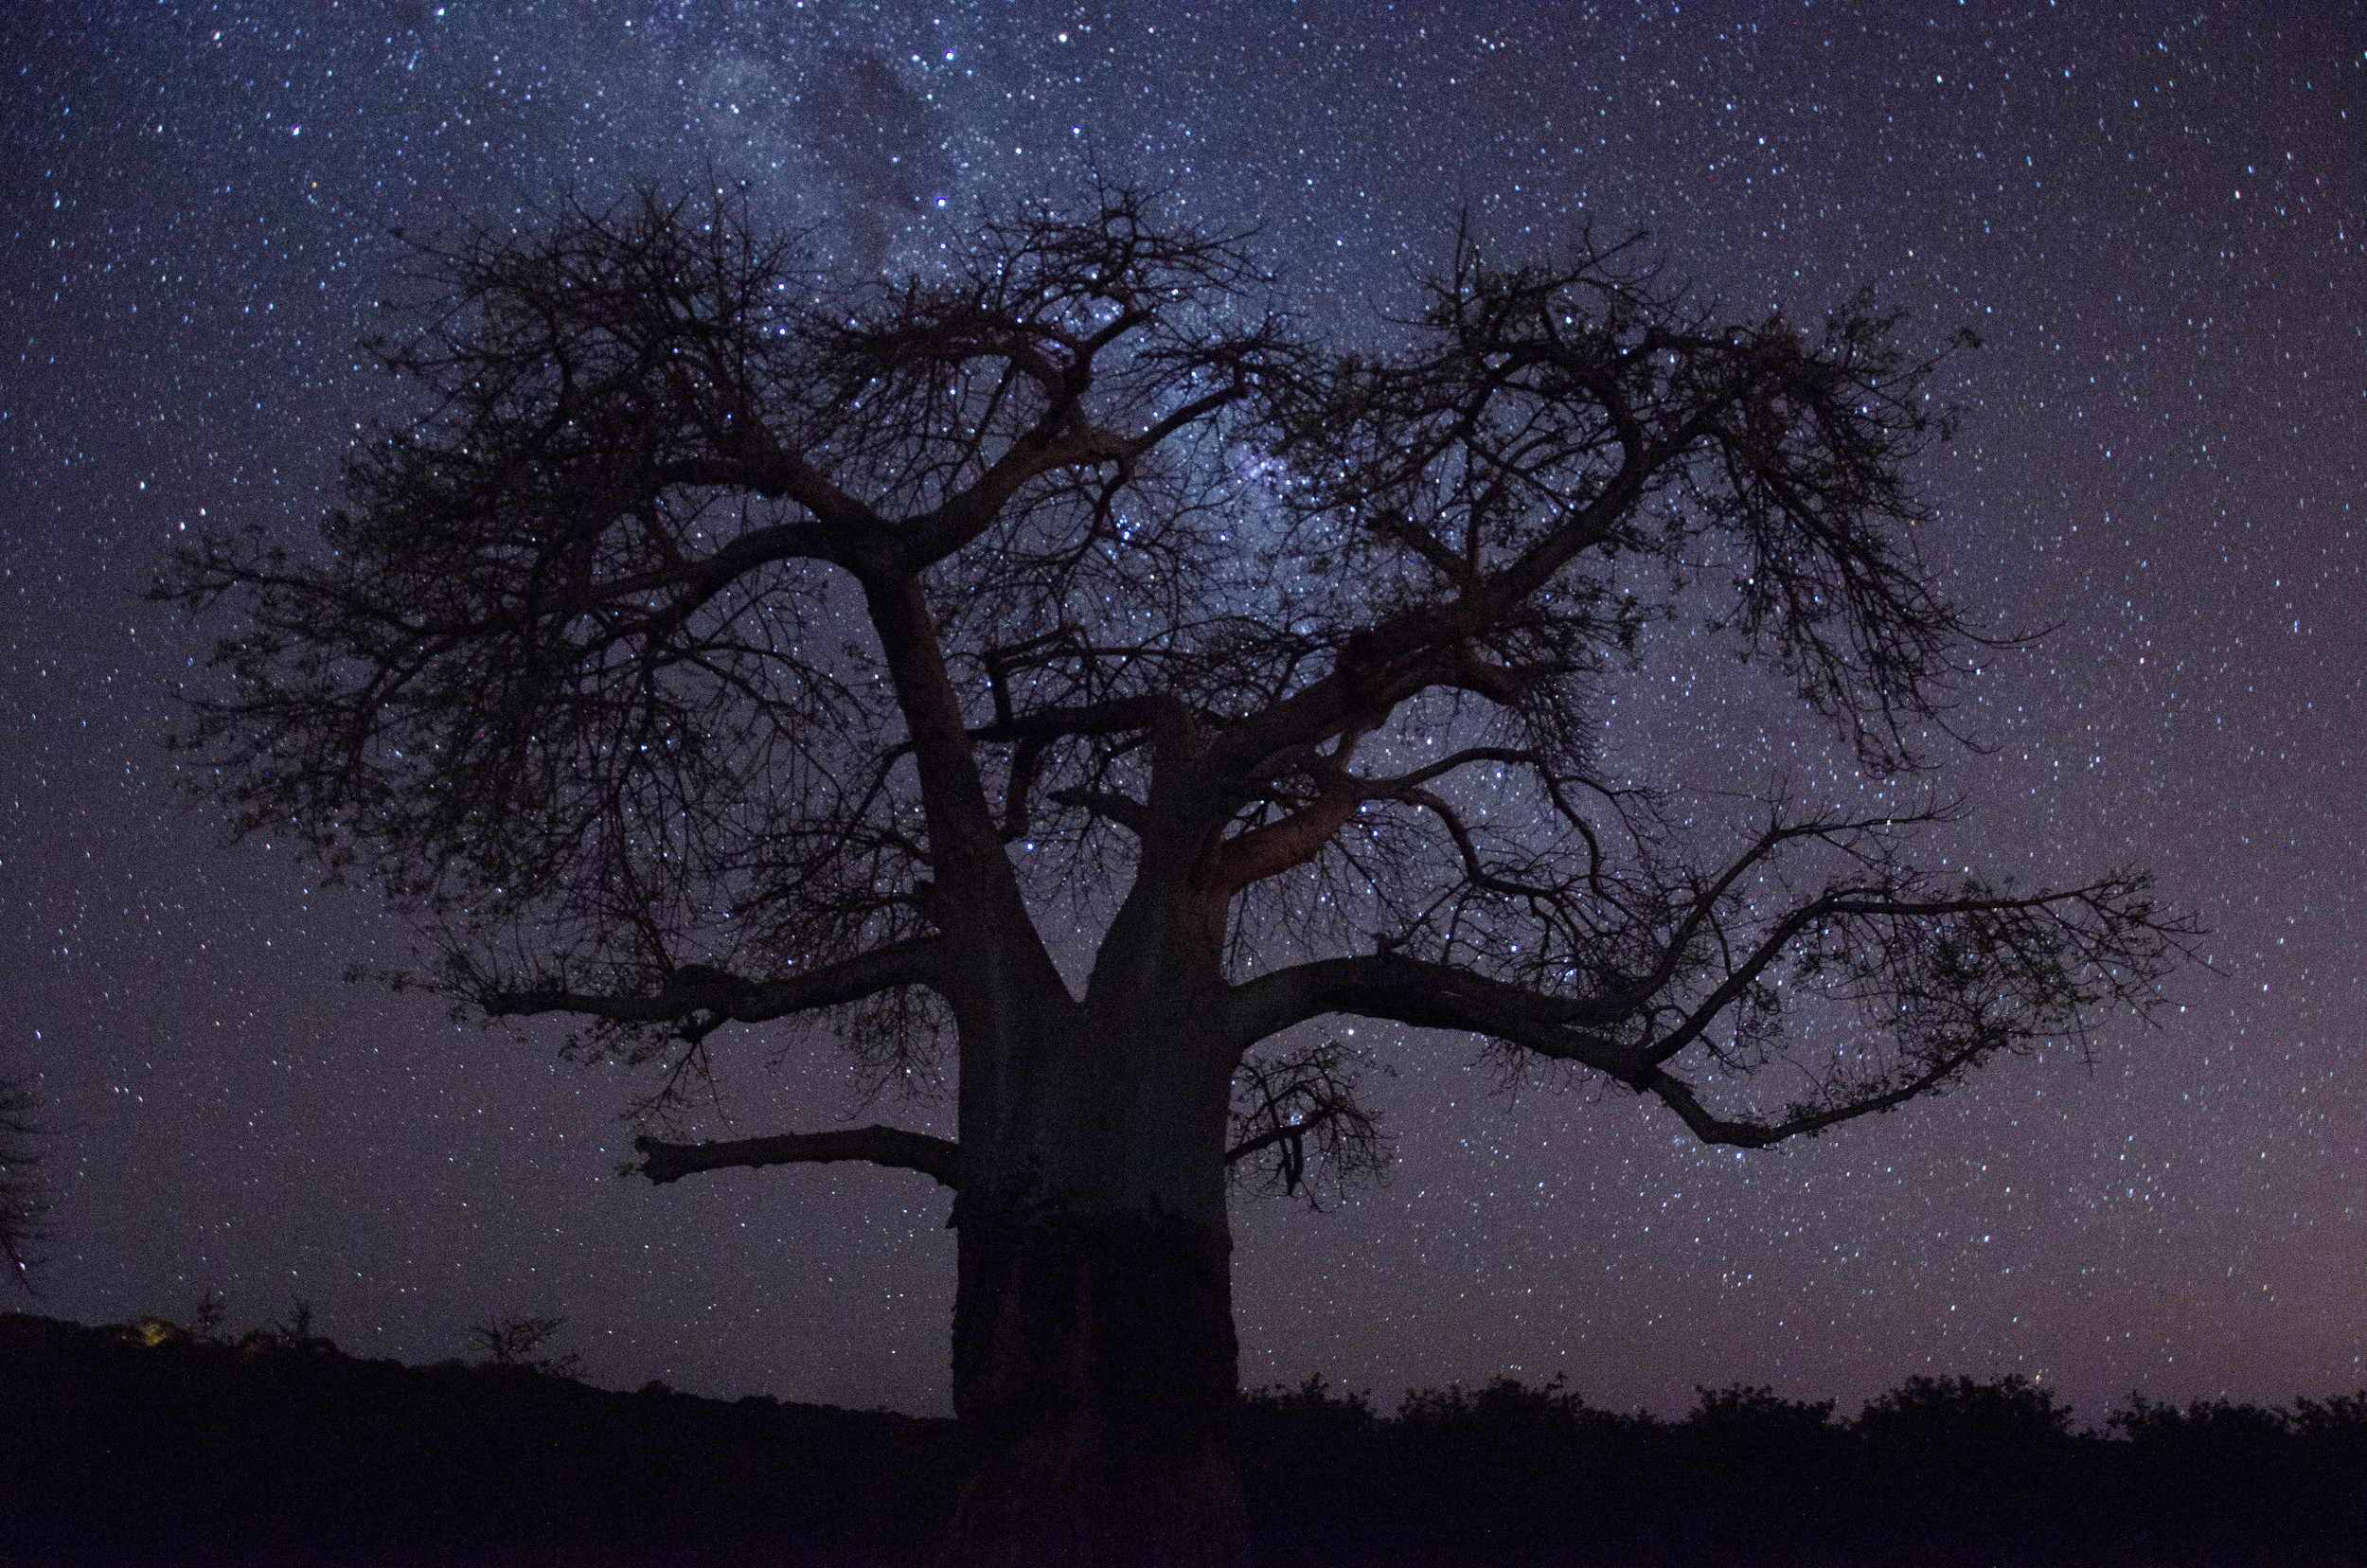 Stars & baobab tree, Kasane, Botswana